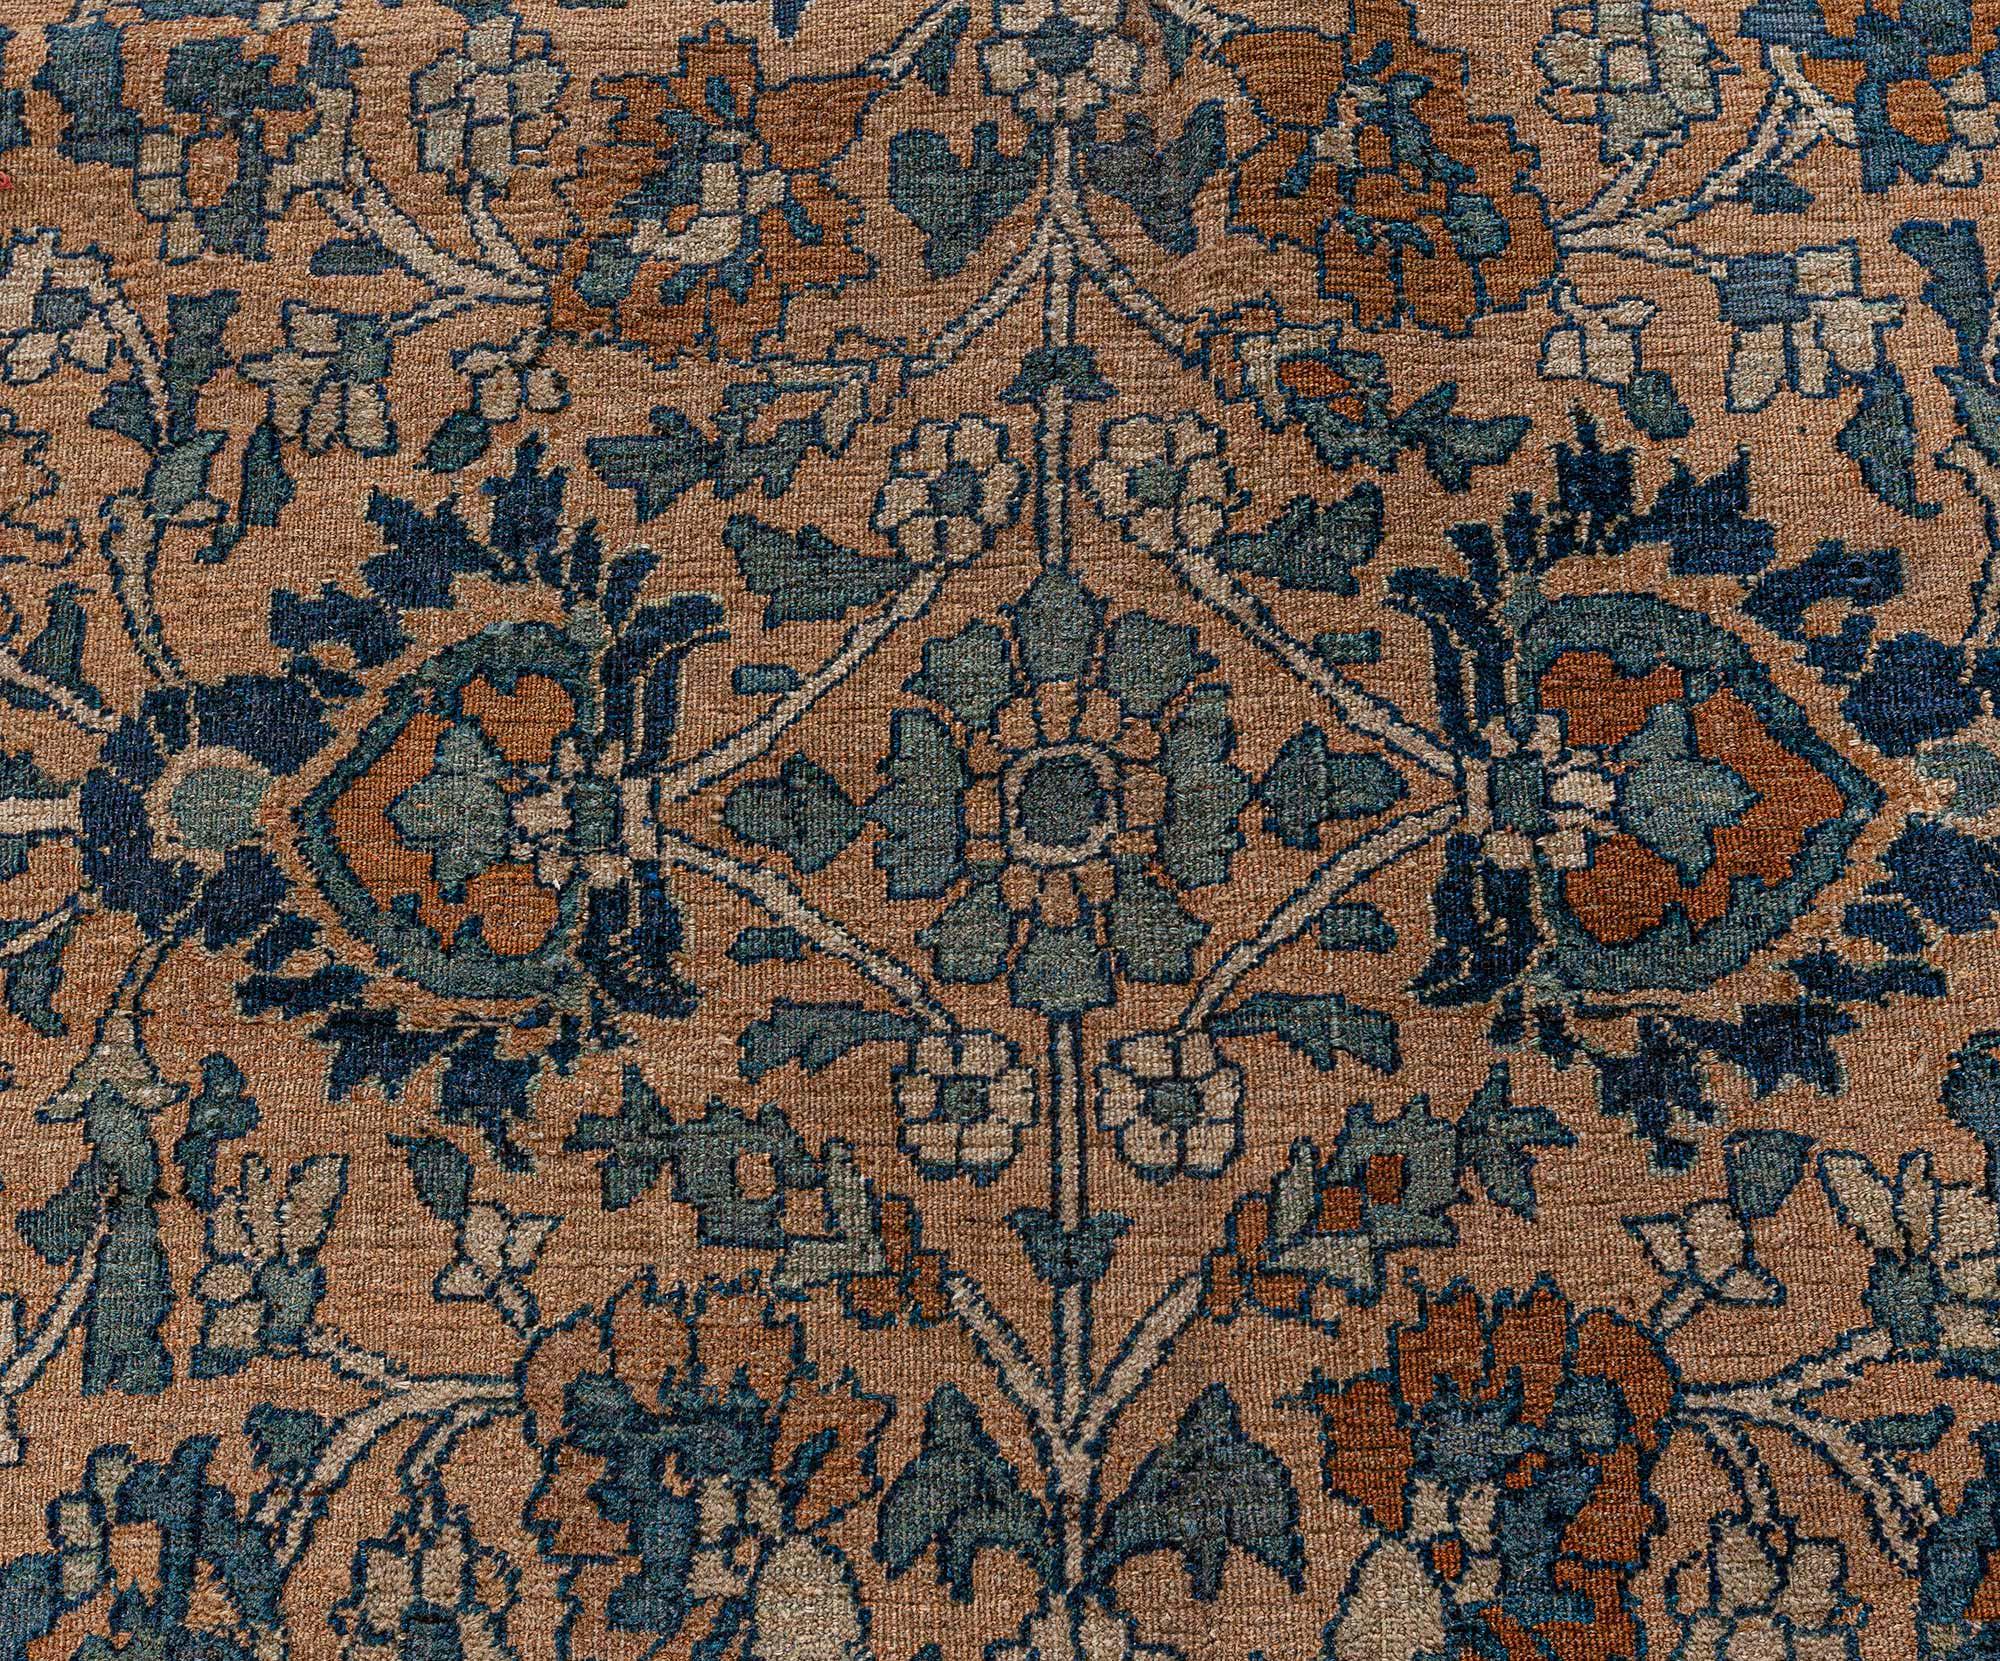 Antique Persian Meshad Botanic handmade wool rug
Size: 12'10